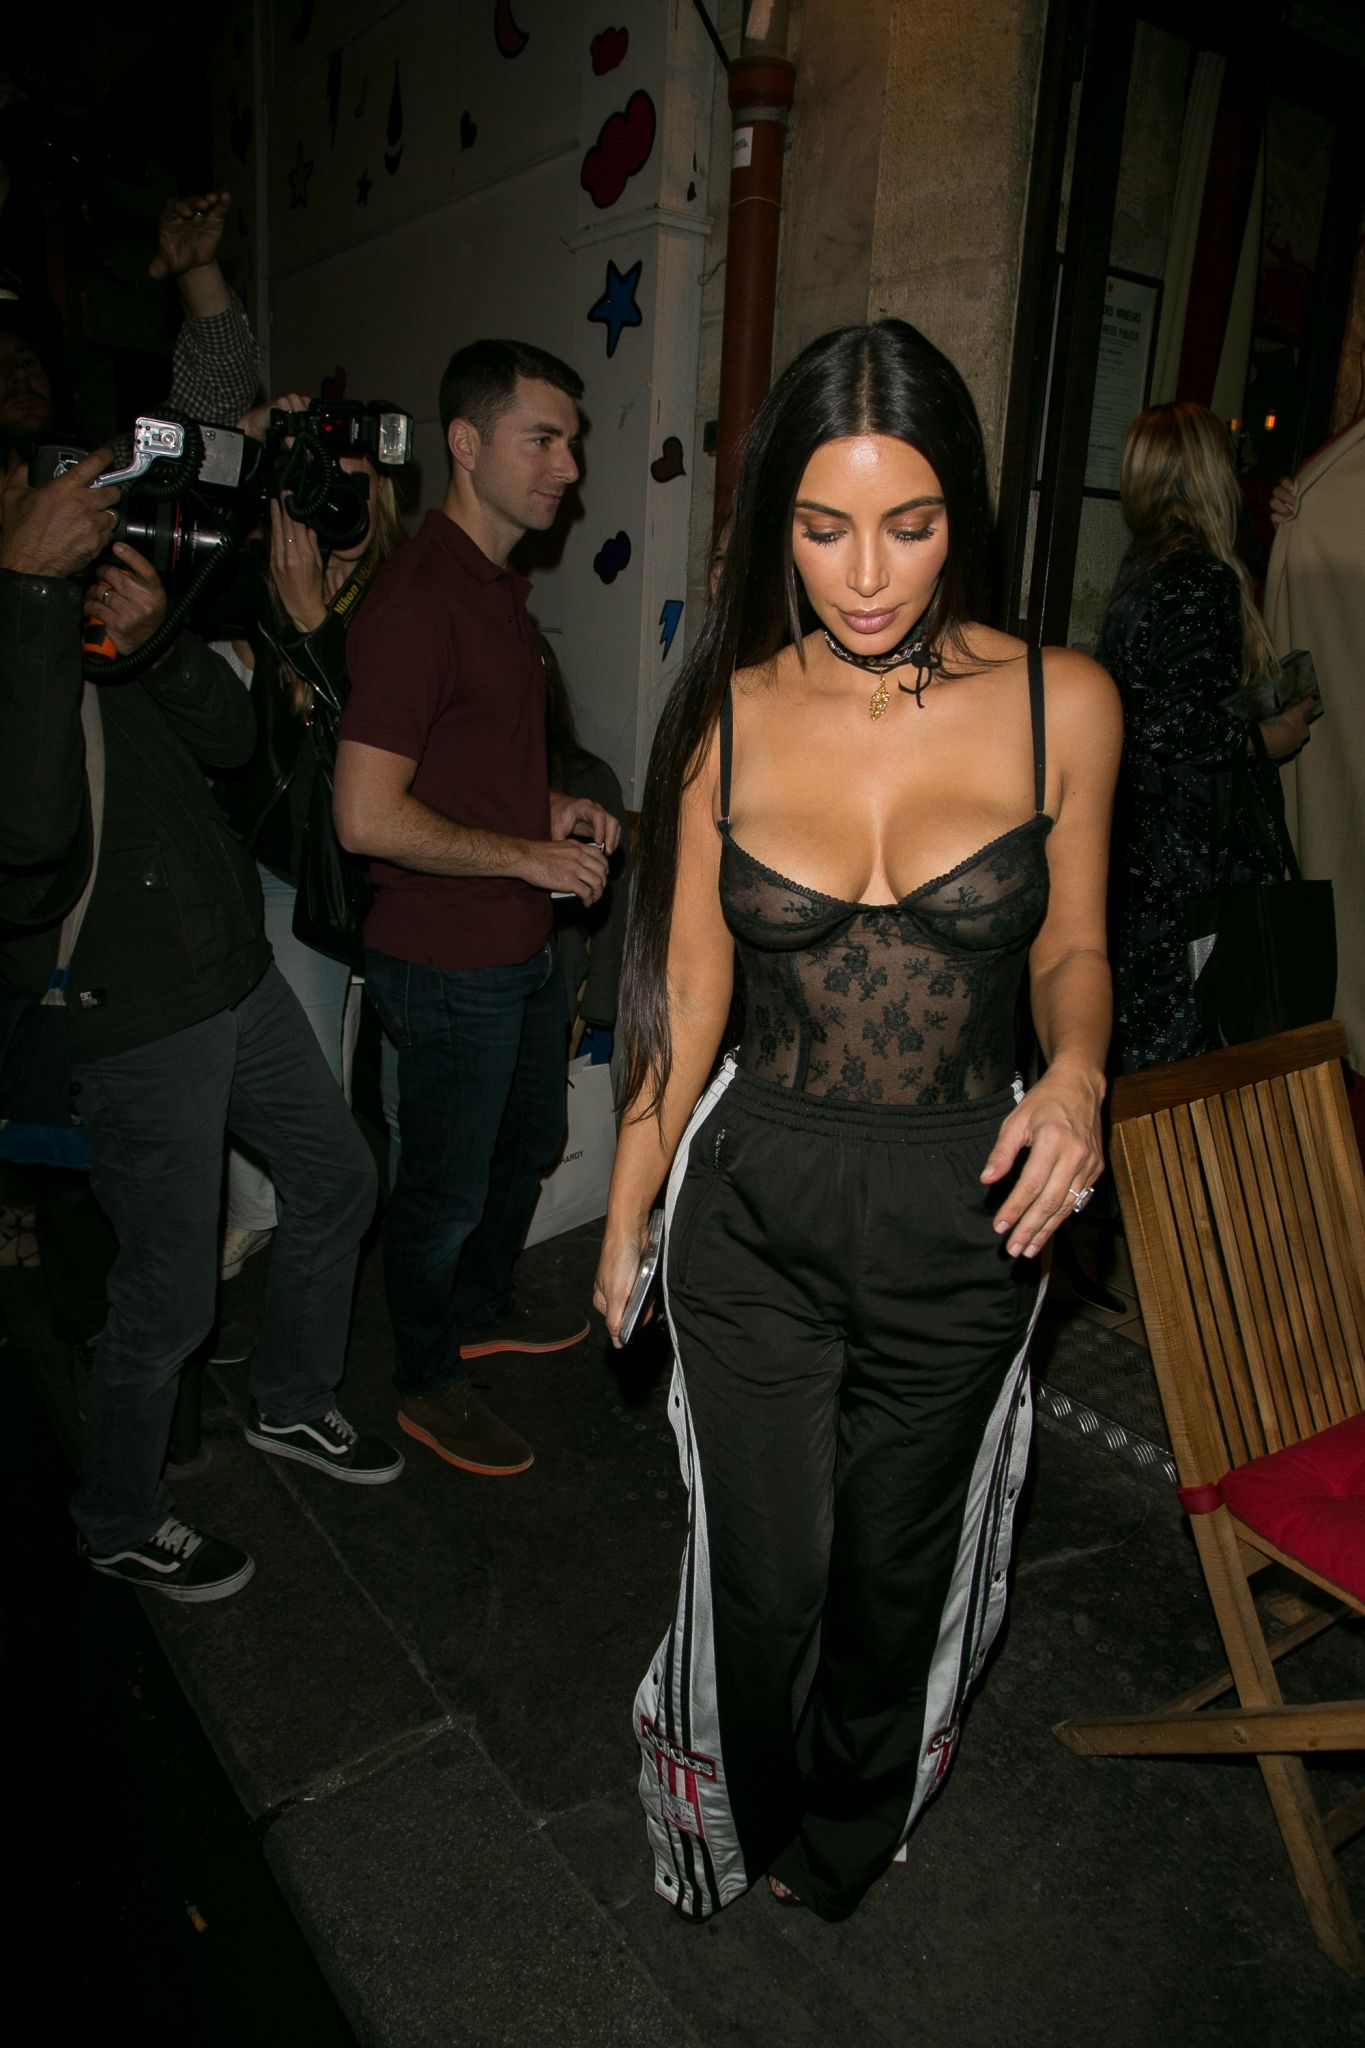 Kim Kardashian Steps Out in Paris Wearing a Sheer Bodysuit: Pics!